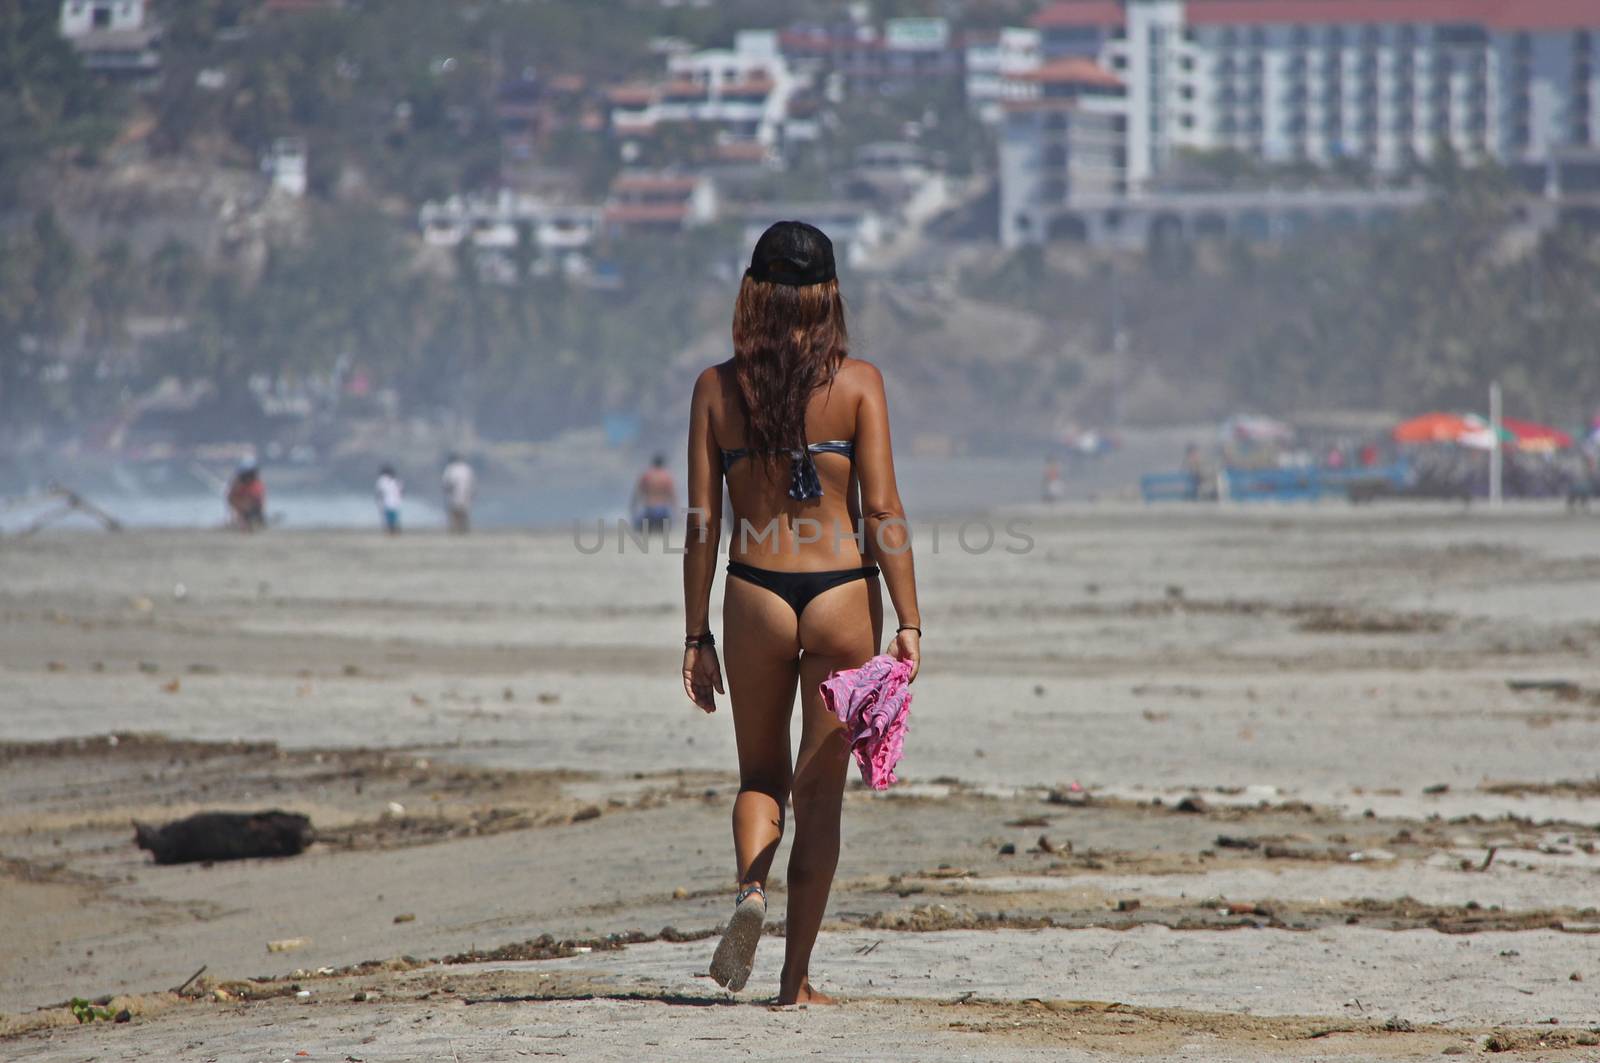 A young lady walking along a beach in Puerto Escondido, Mexico
23 Mar 2013
No model release
Editorial only